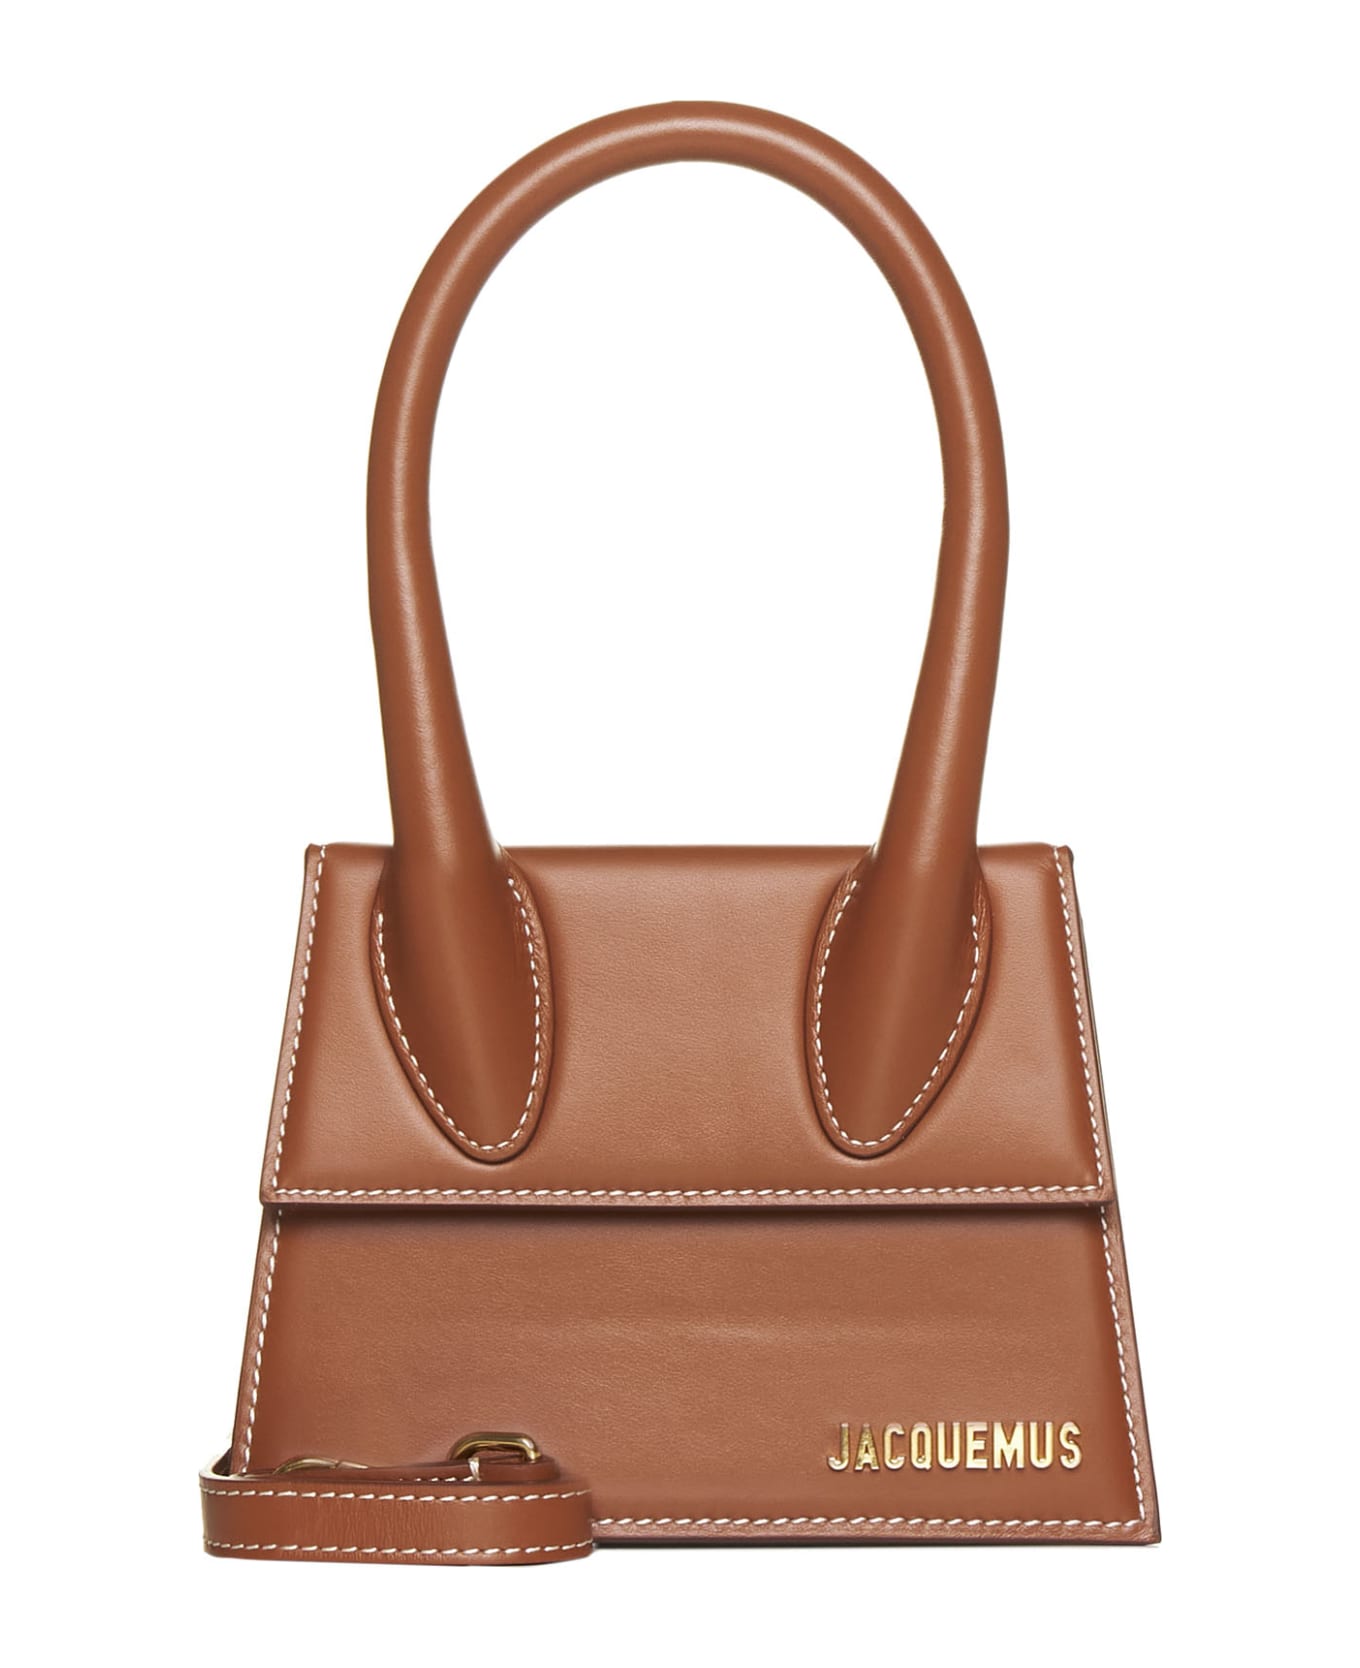 Jacquemus Le Chiquito Moyen Bag - Light brown